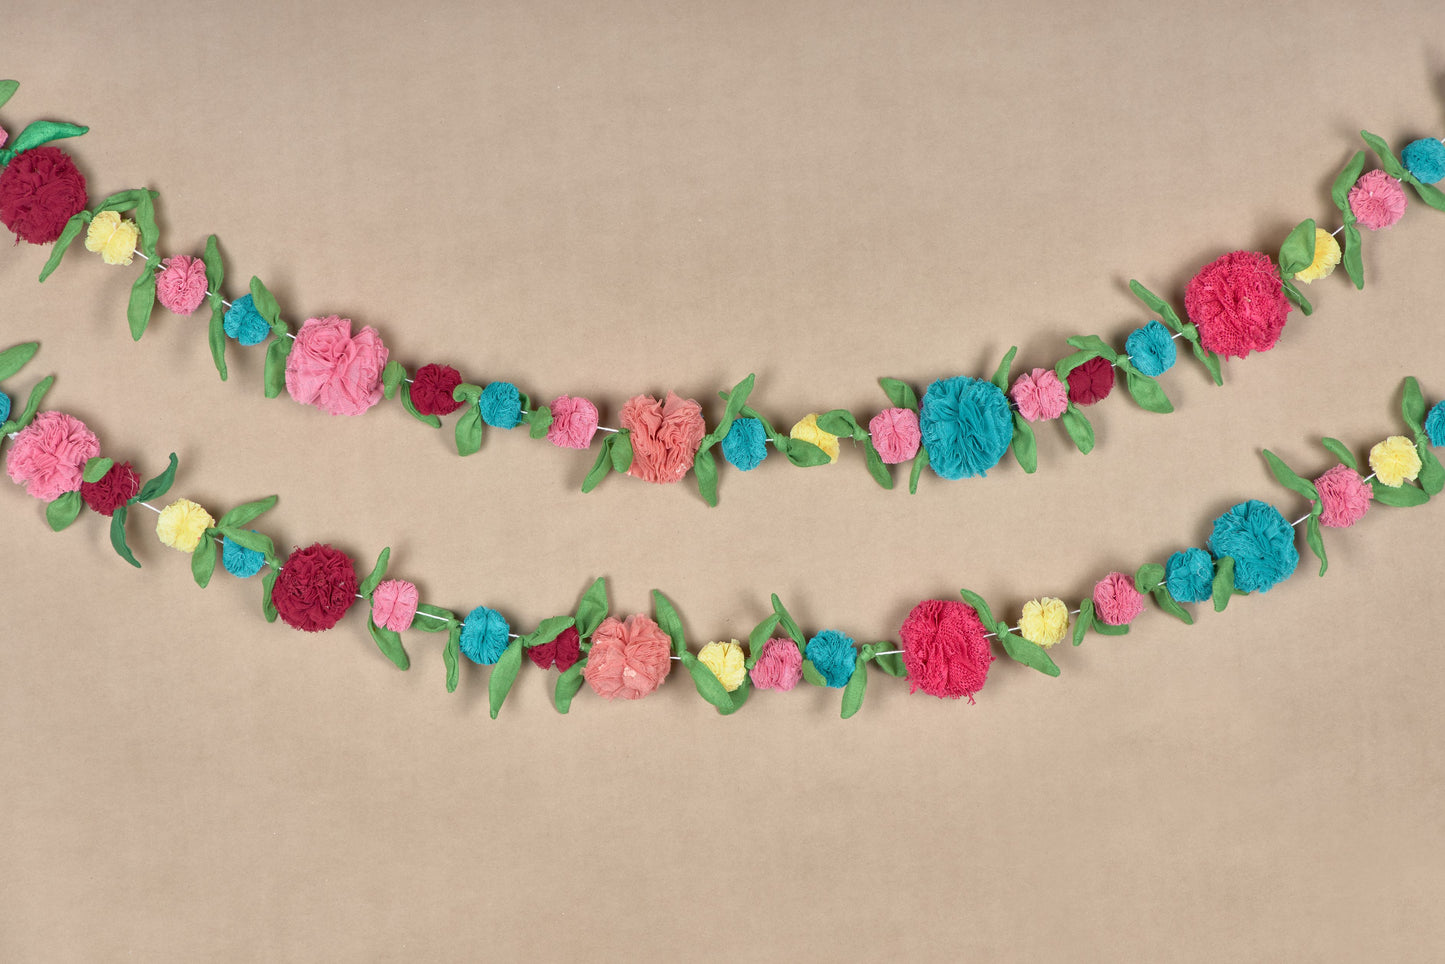 Upcycled Handmade Fabric Flower Decorative Festive Garland String